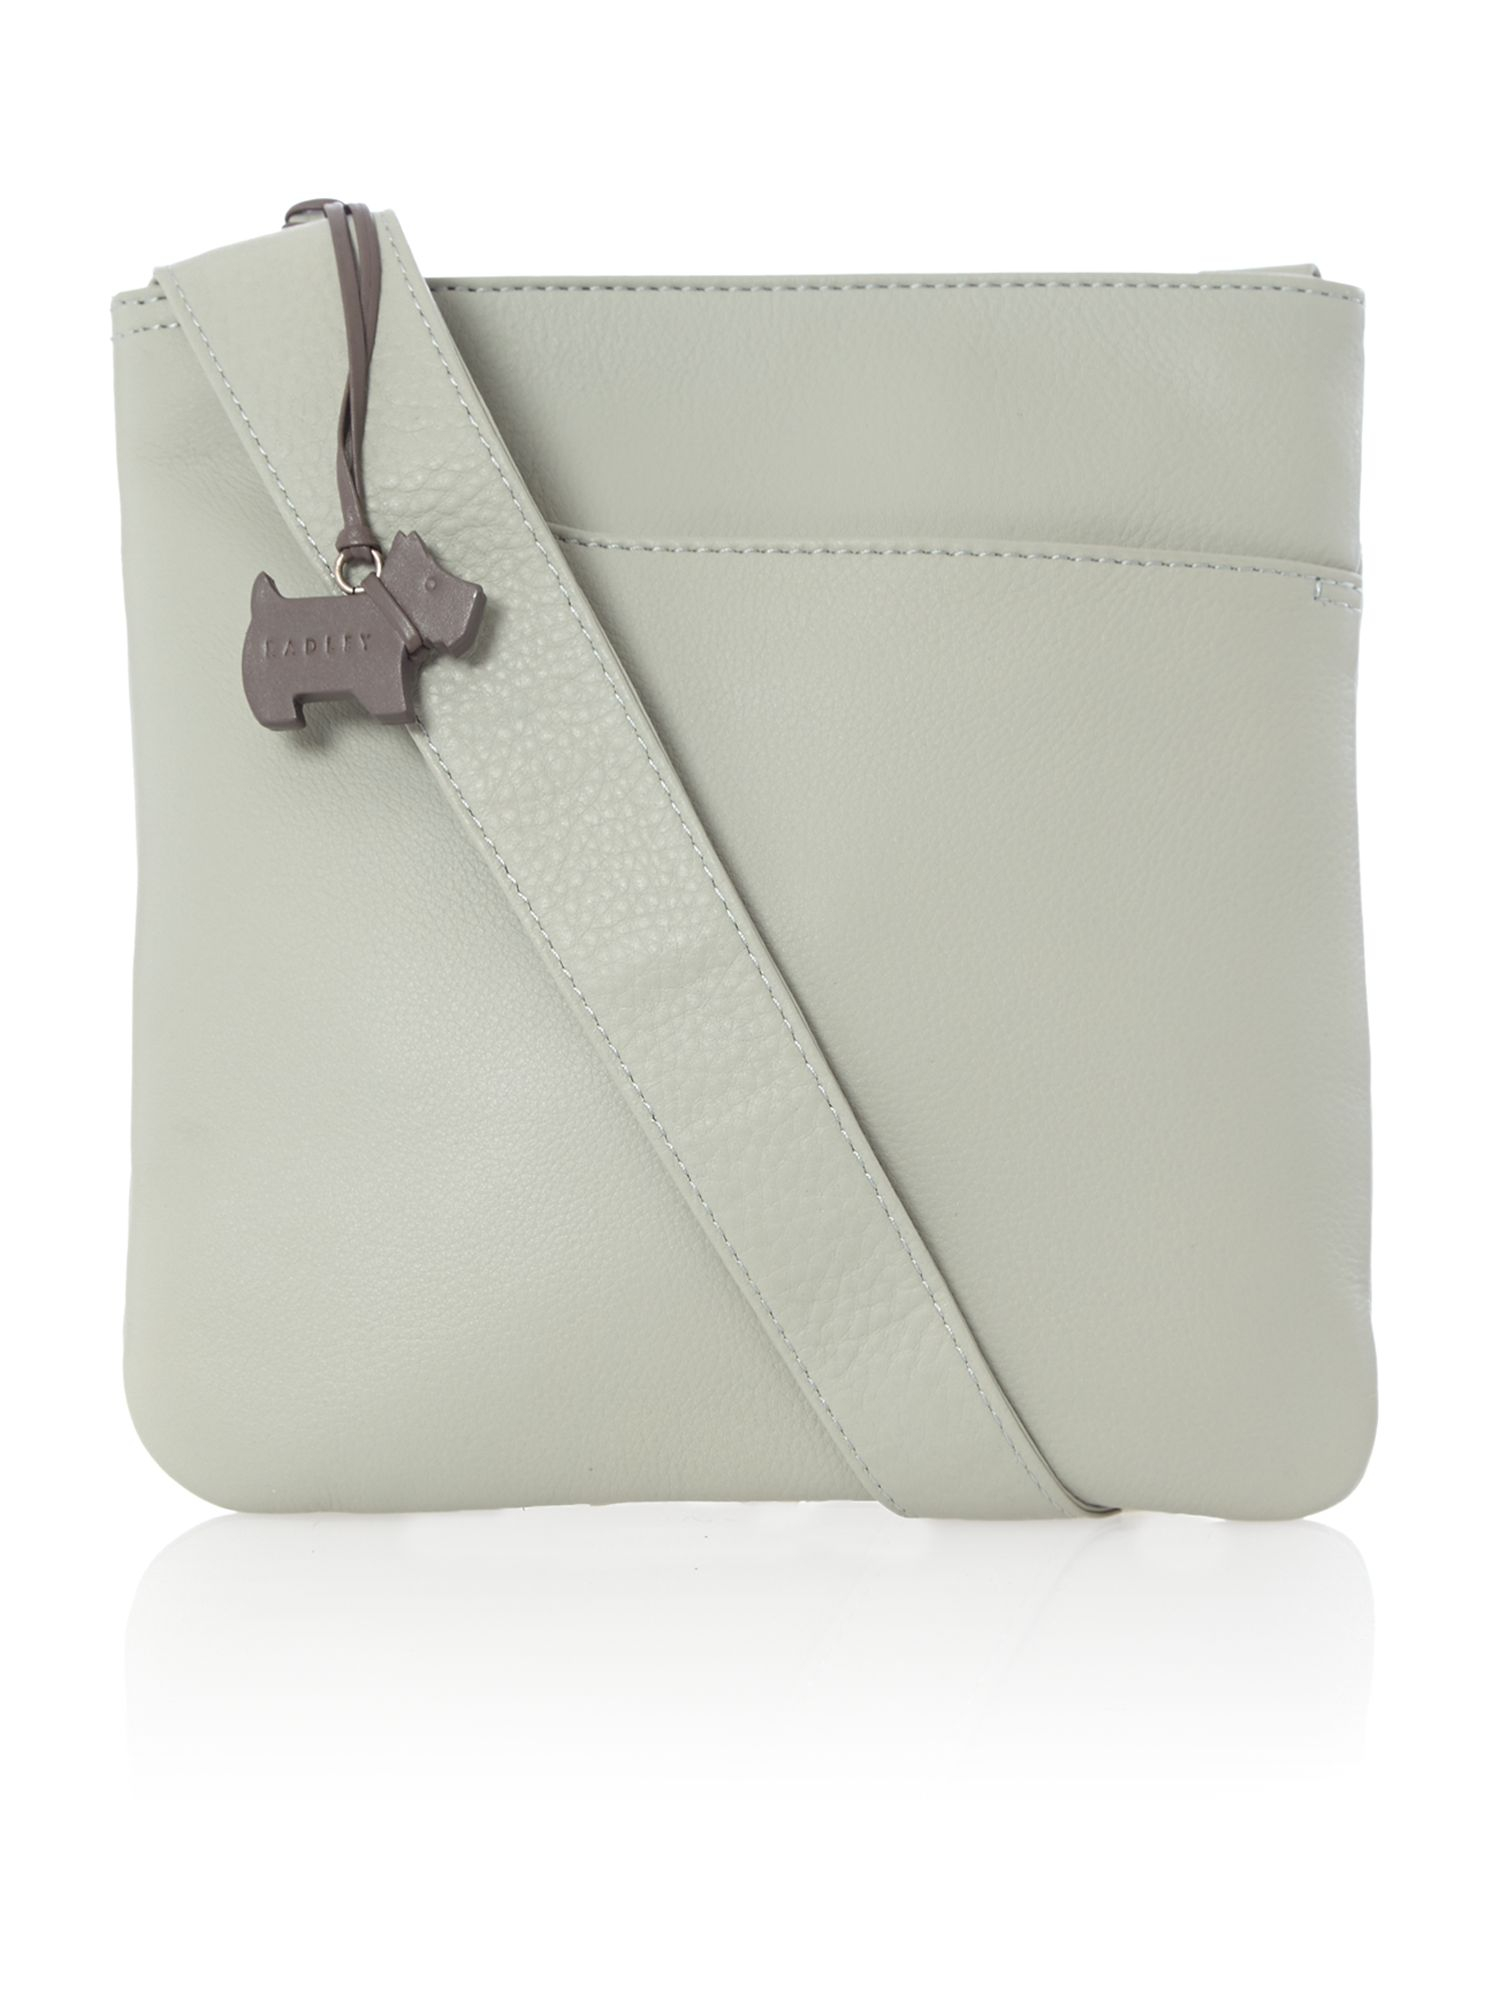 Radley Pocket Bag Small Ziptop Xbody Leather Blue Bag in Beige | Lyst